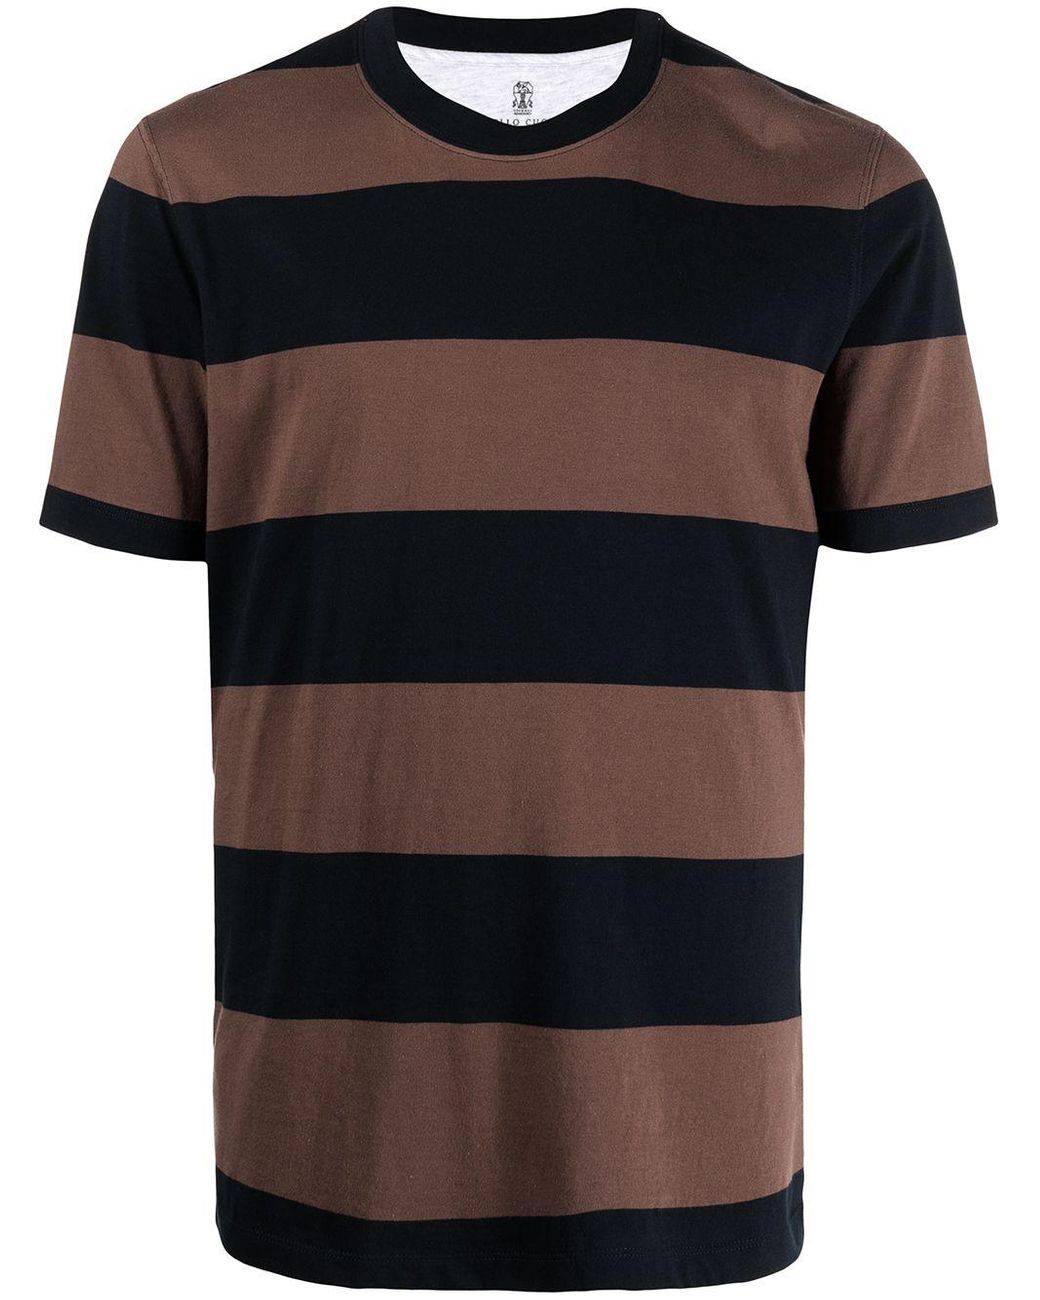 Brunello Cucinelli Striped Cotton T-shirt in Brown for Men - Lyst